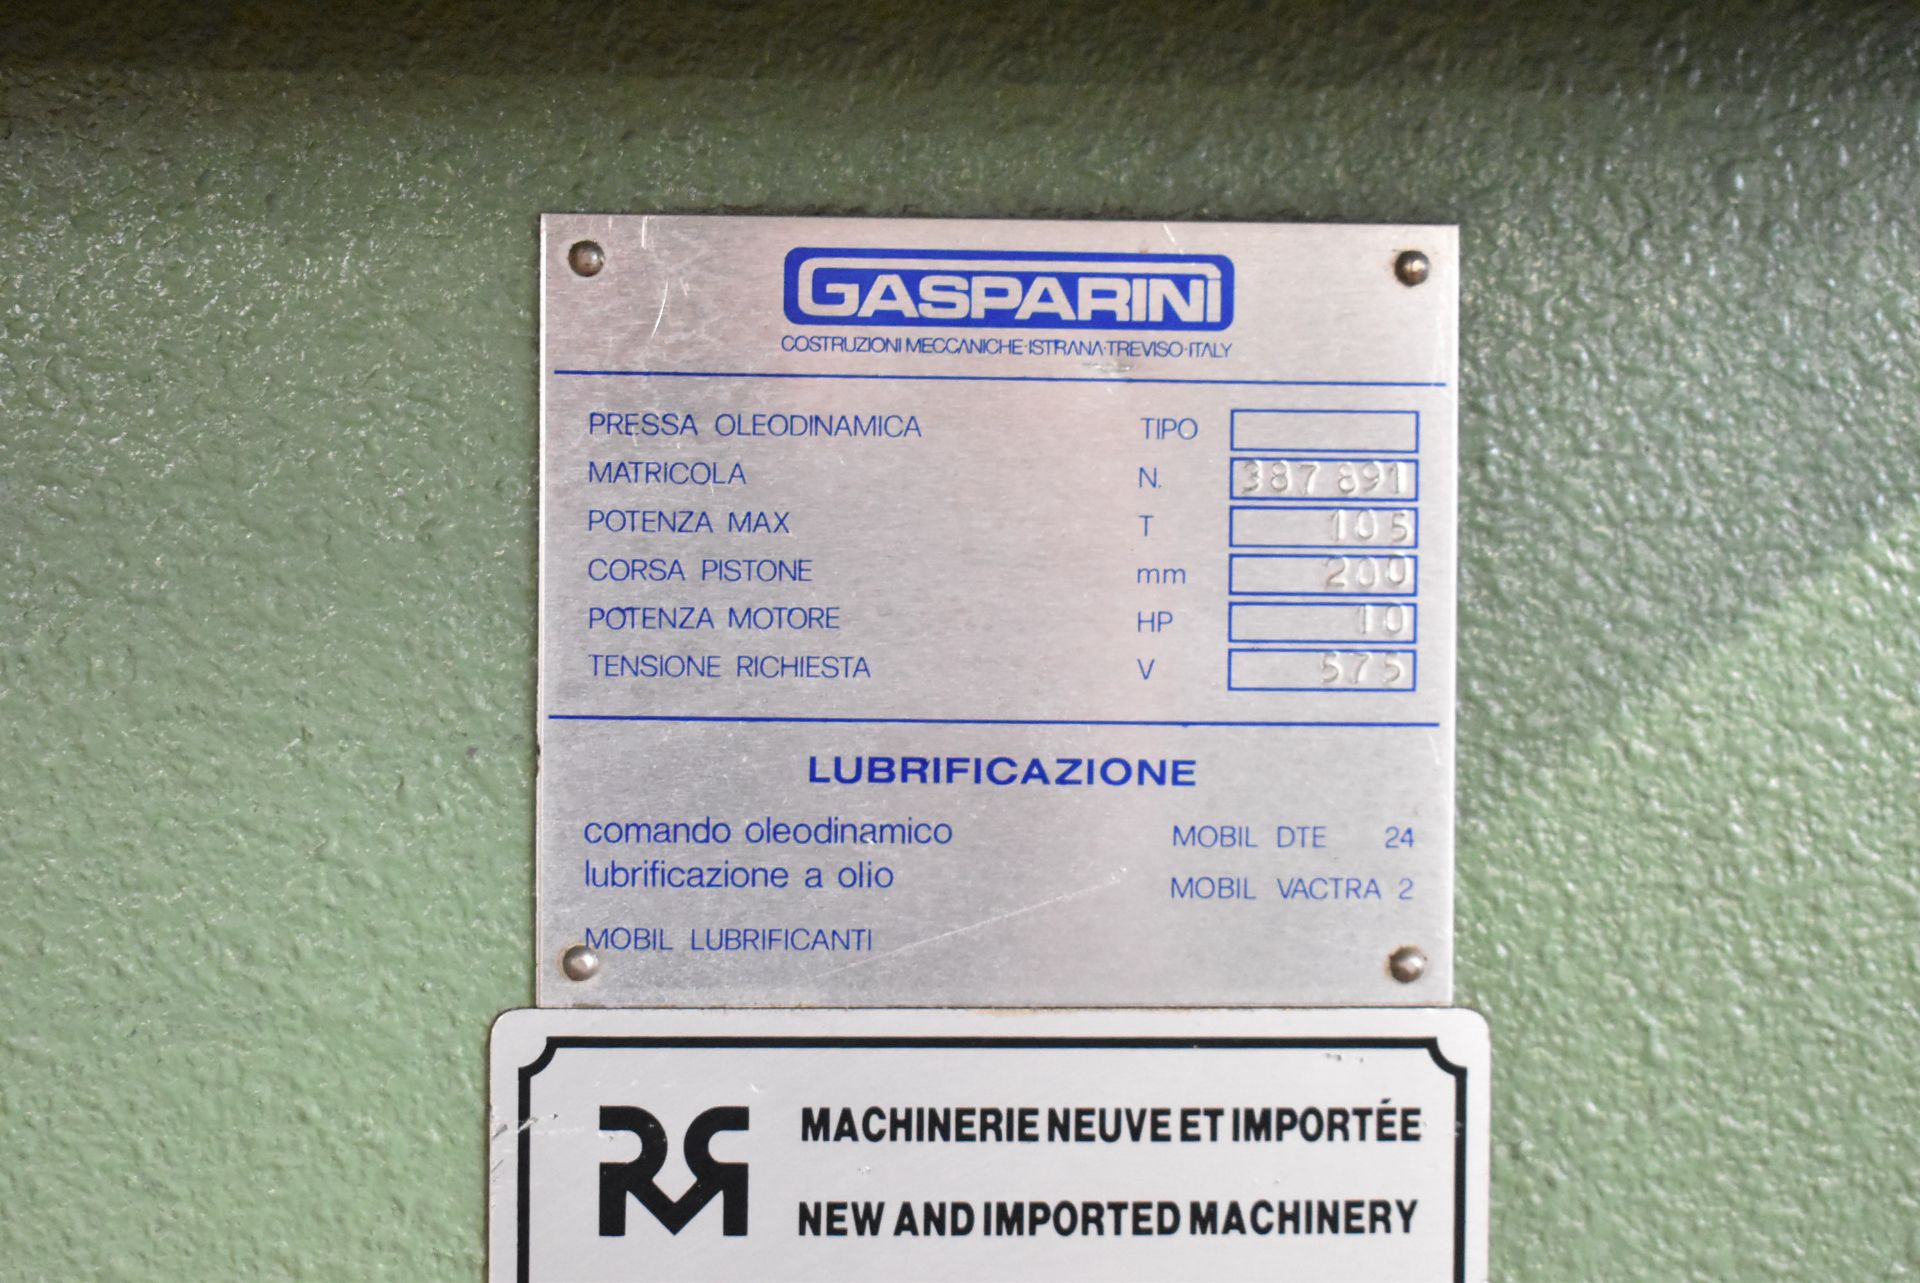 GASPARINI POA 105 10' CNC HYDRAULIC CNC BRAKE PRESS WITH 105 TON CAPACITY, HURCO AUTOBEND 5C - Image 7 of 10